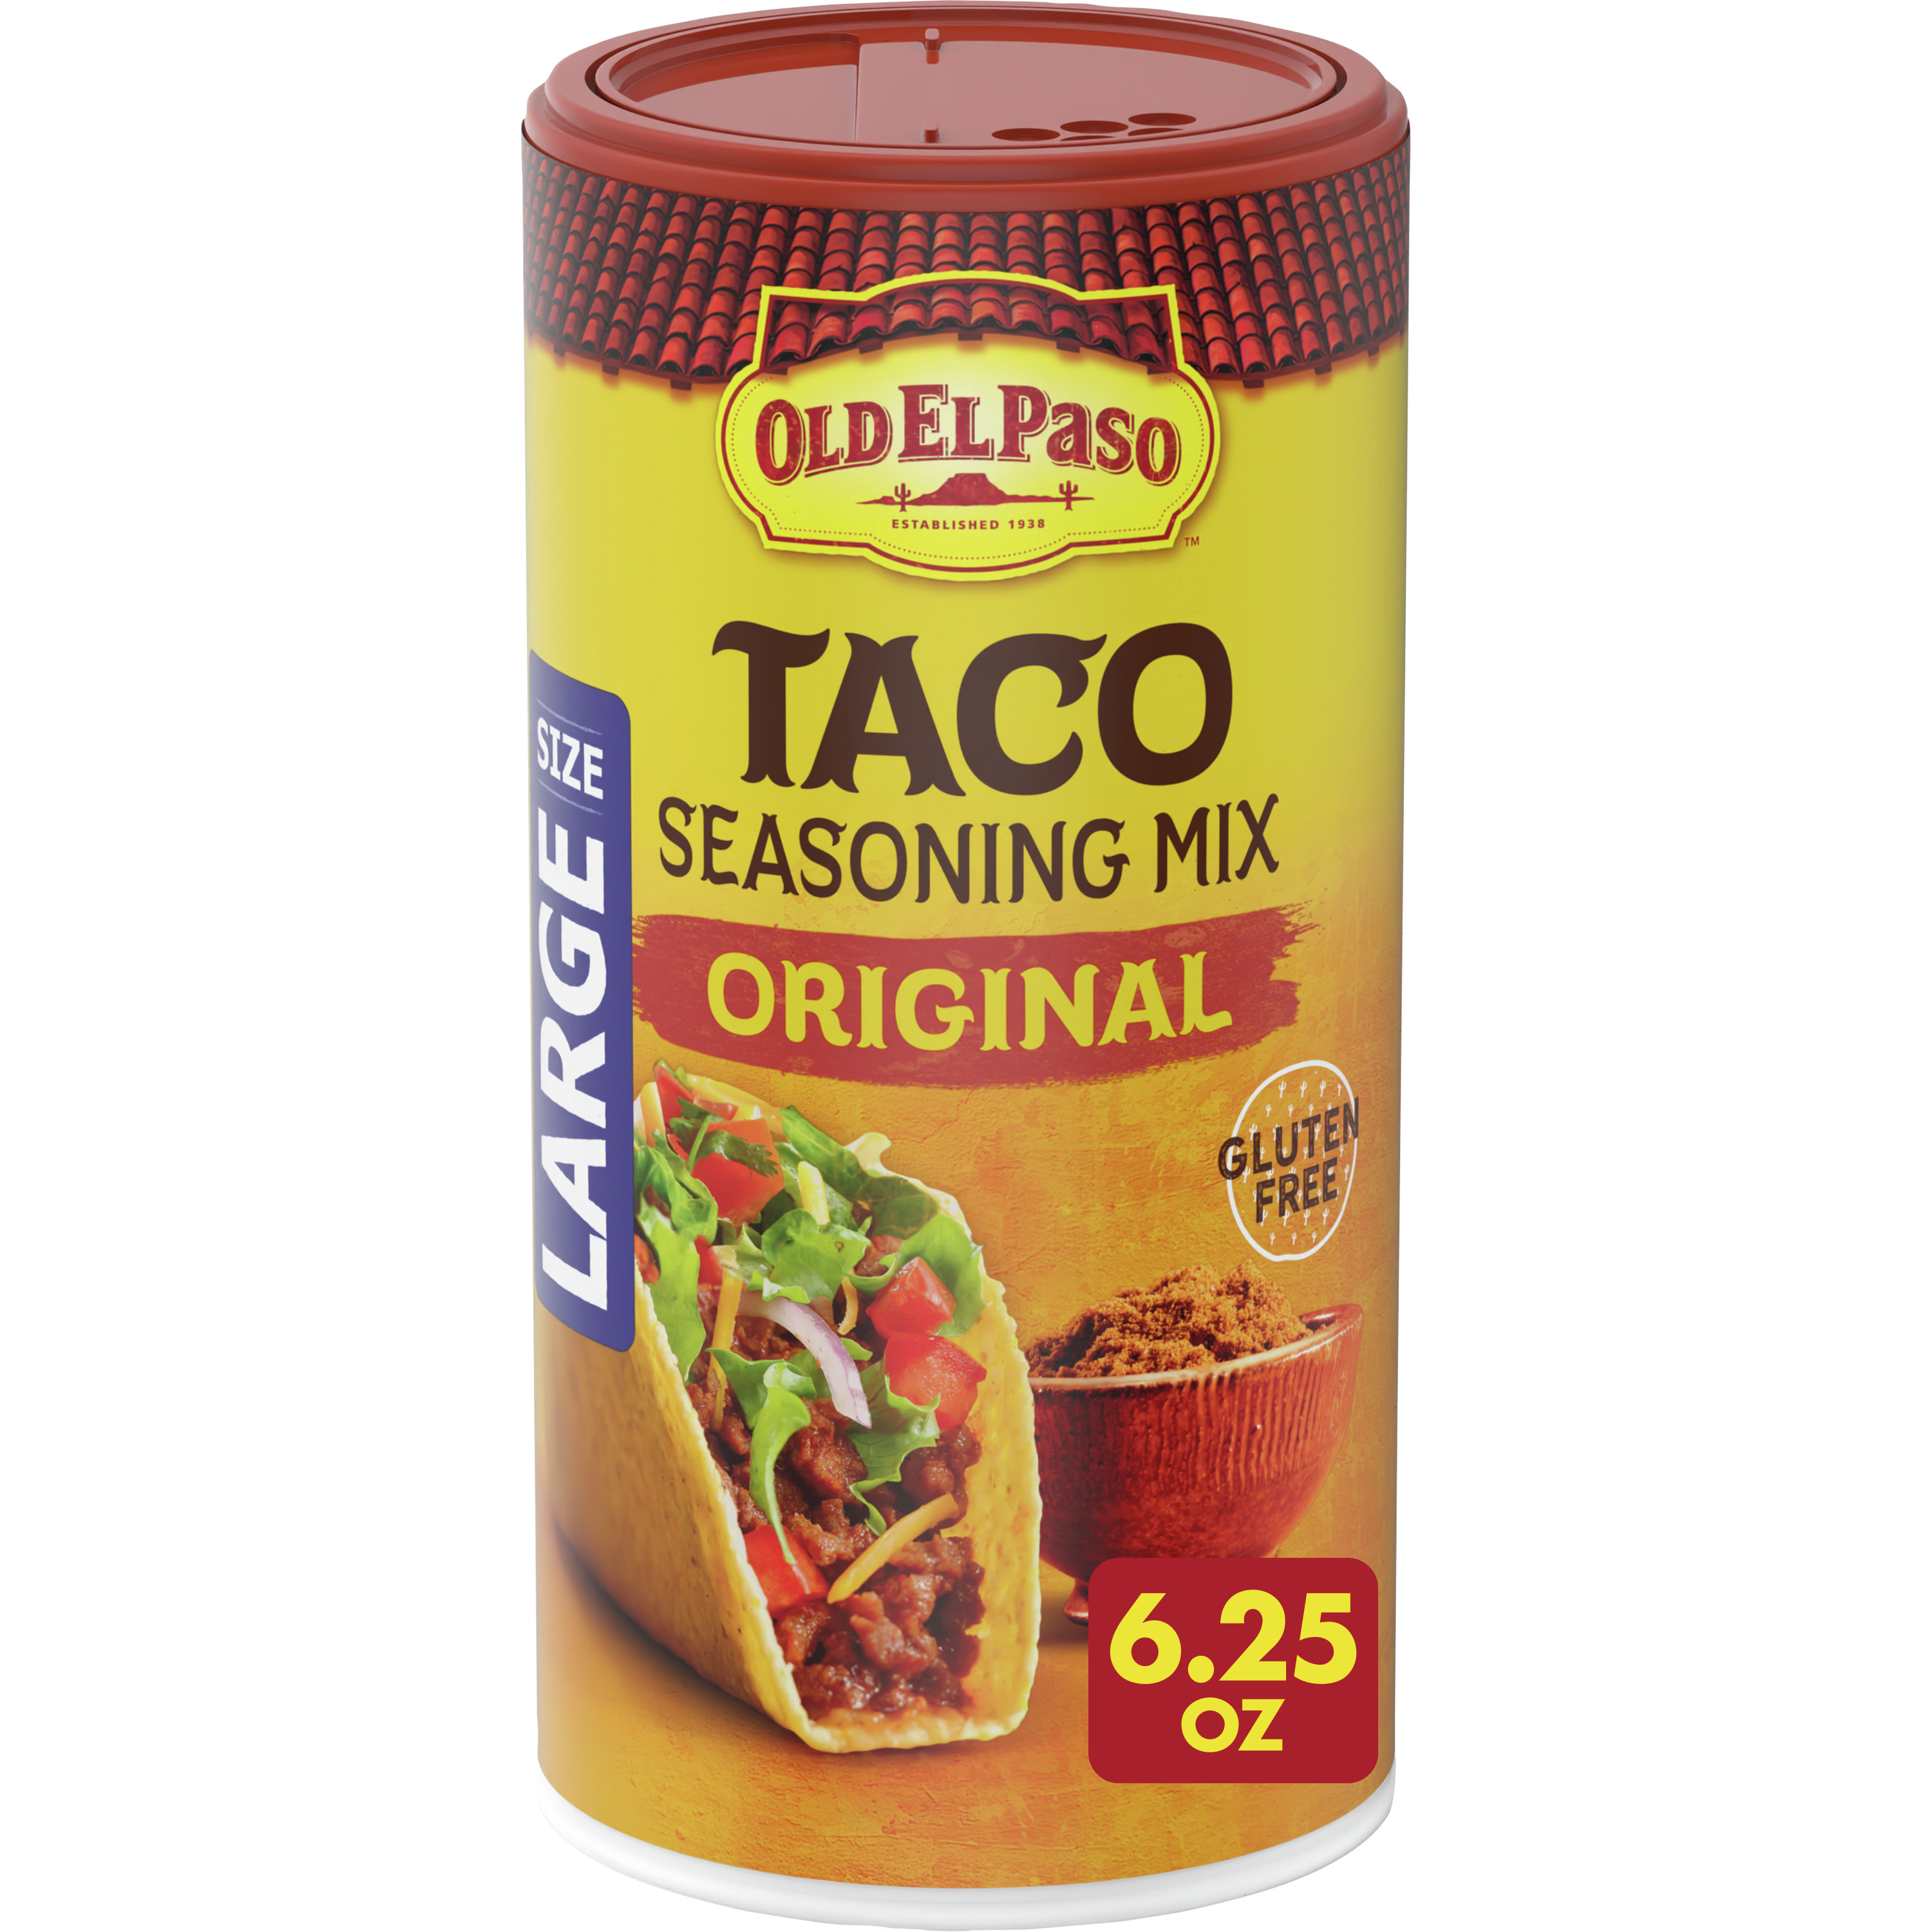 Old El Paso Taco Seasoning, Original, Large Size, 6.25 oz. - image 1 of 11